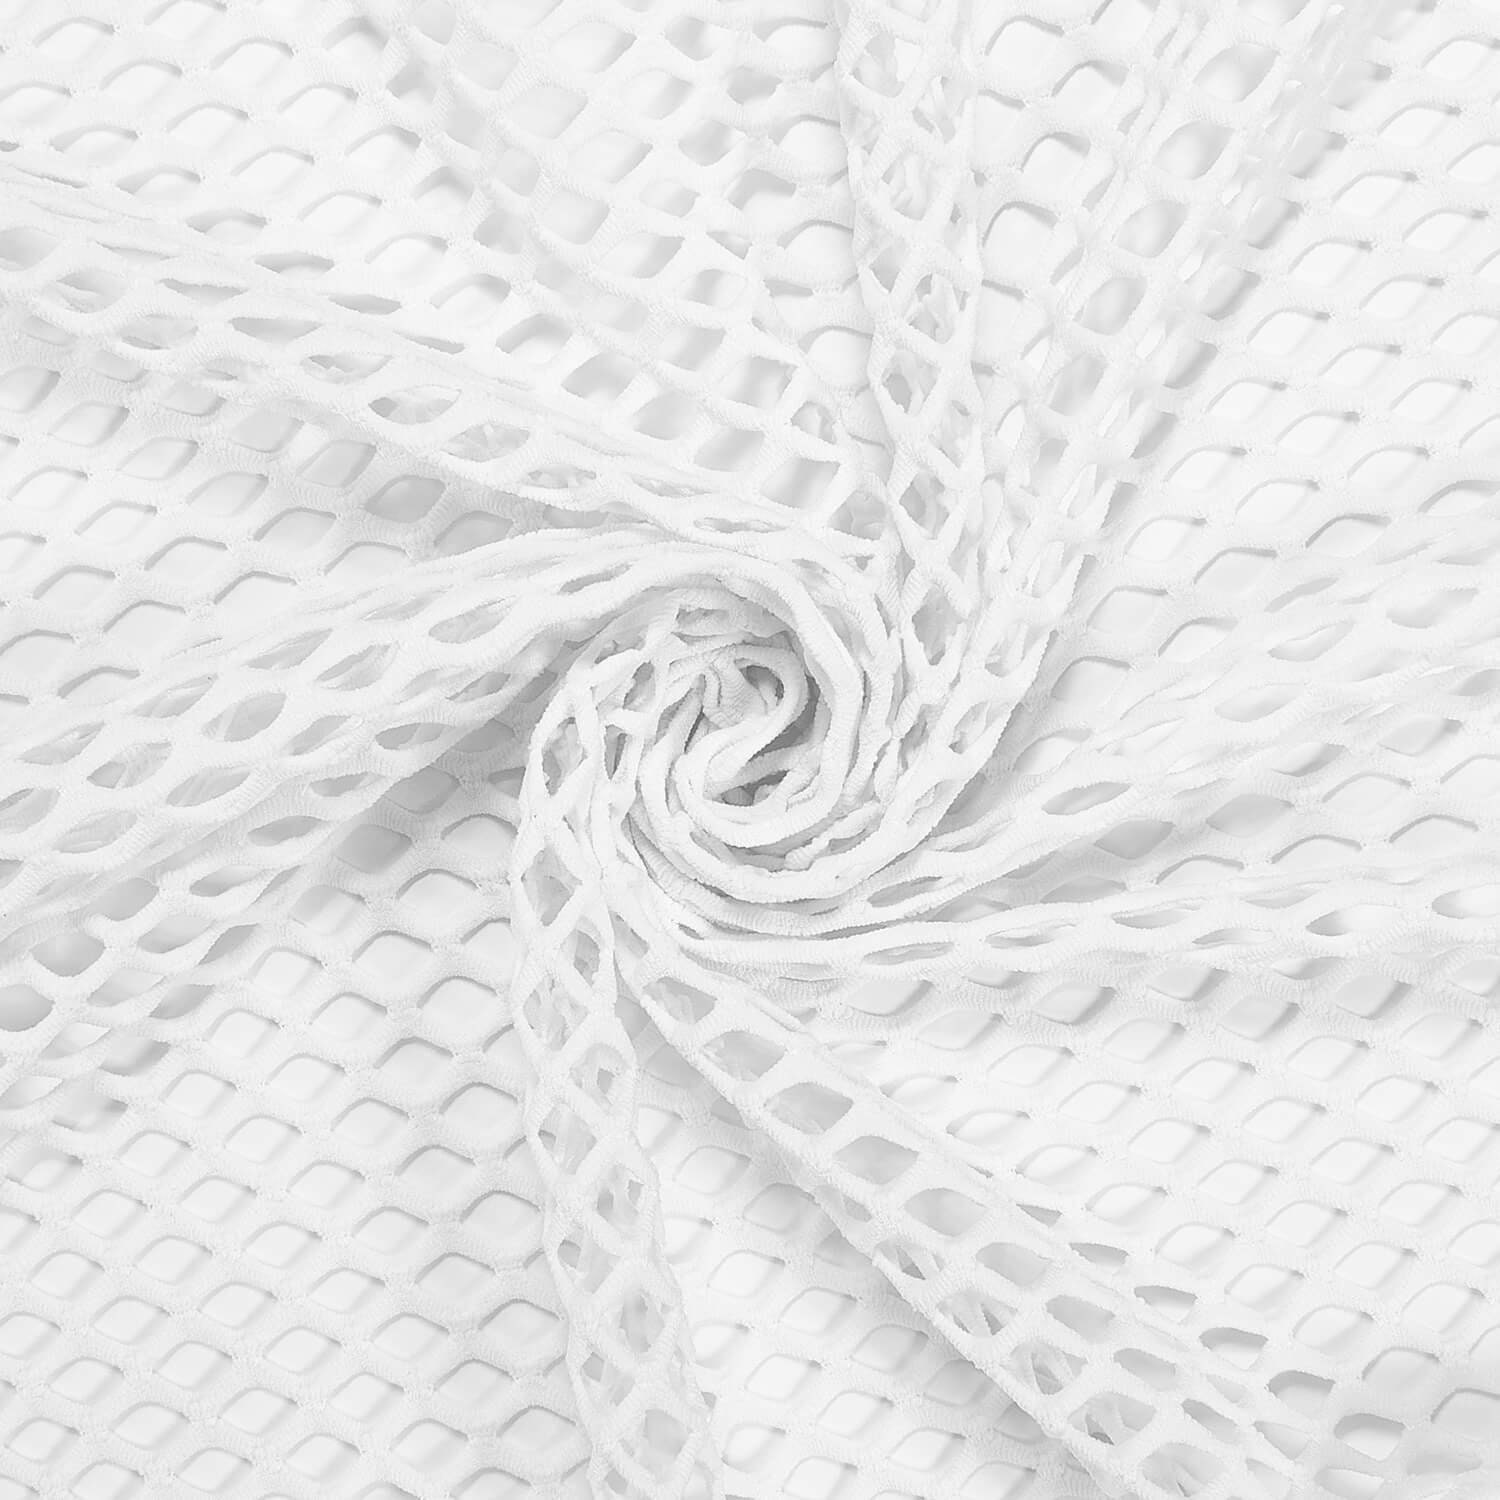 White Cabaret Stretch Mesh Net Fabric Spandex Hole Costume Dance